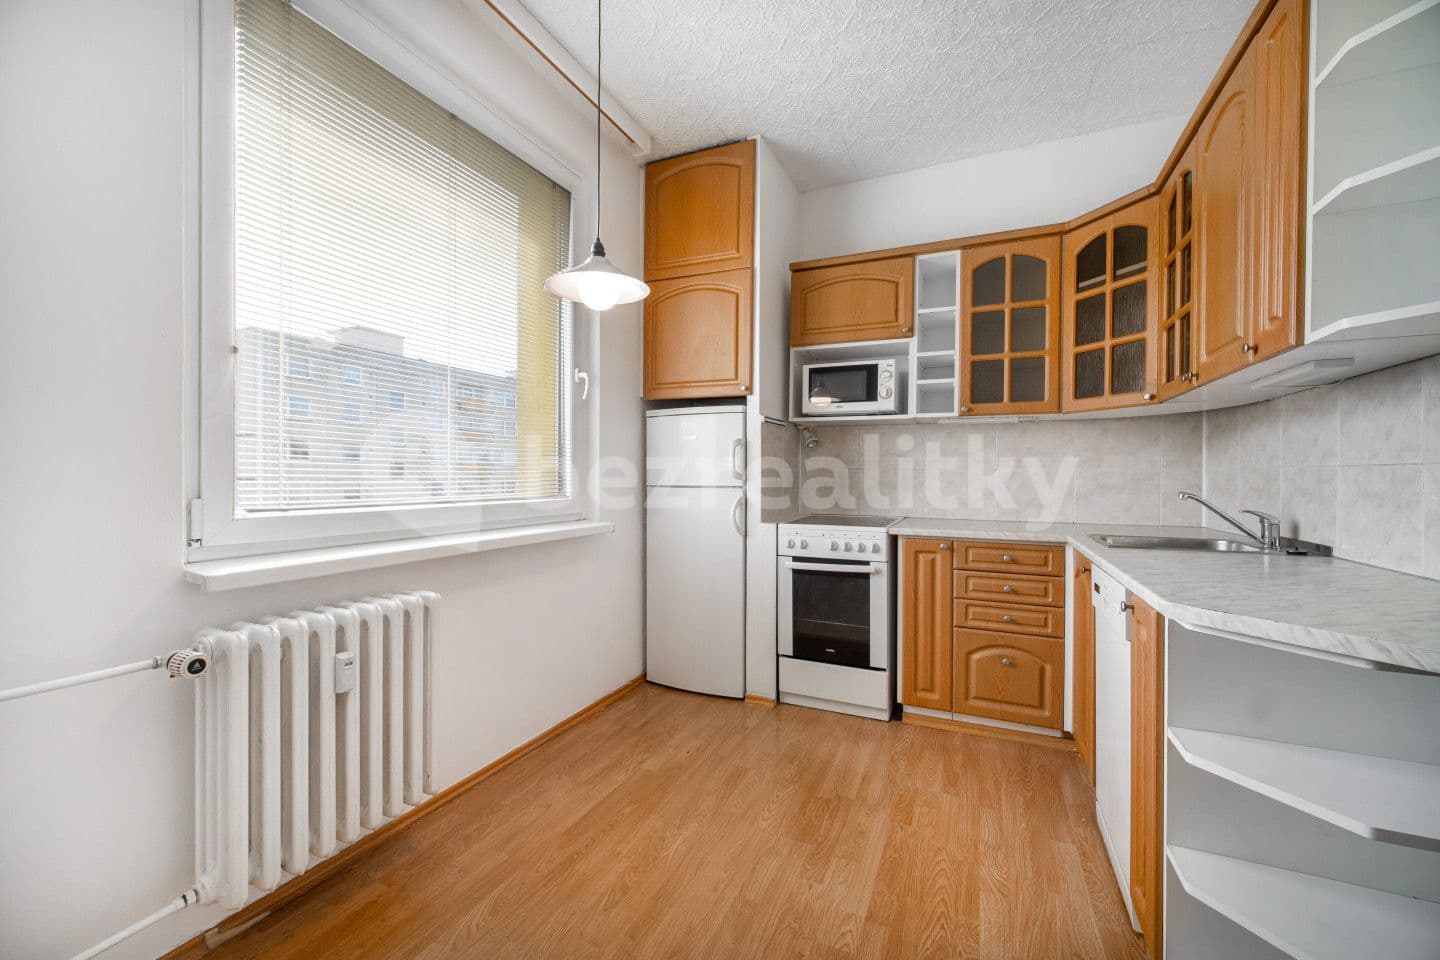 1 bedroom flat for sale, 35 m², 17. listopadu, Žamberk, Pardubický Region